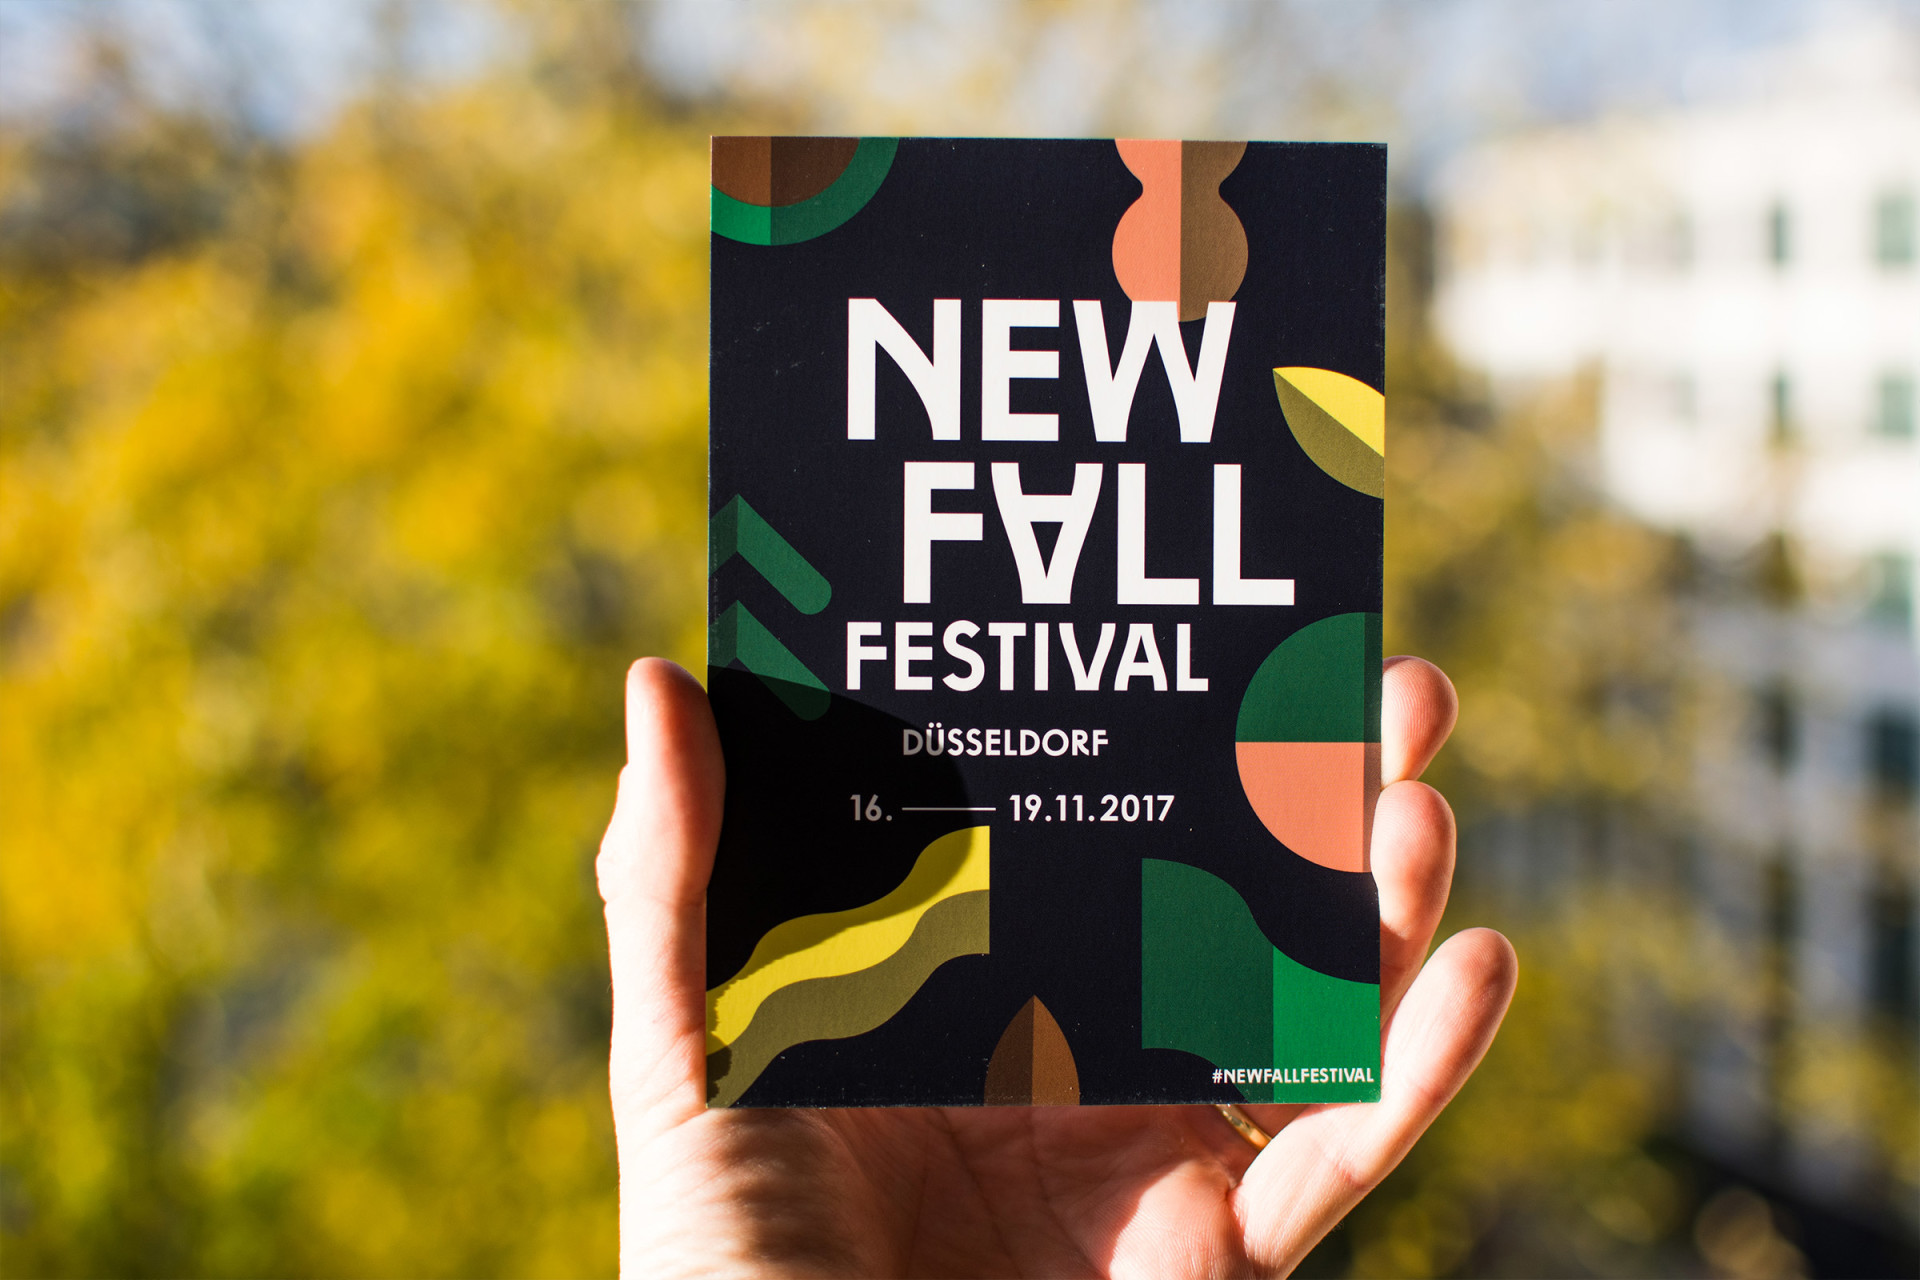 New Fall Festival 2017 ()